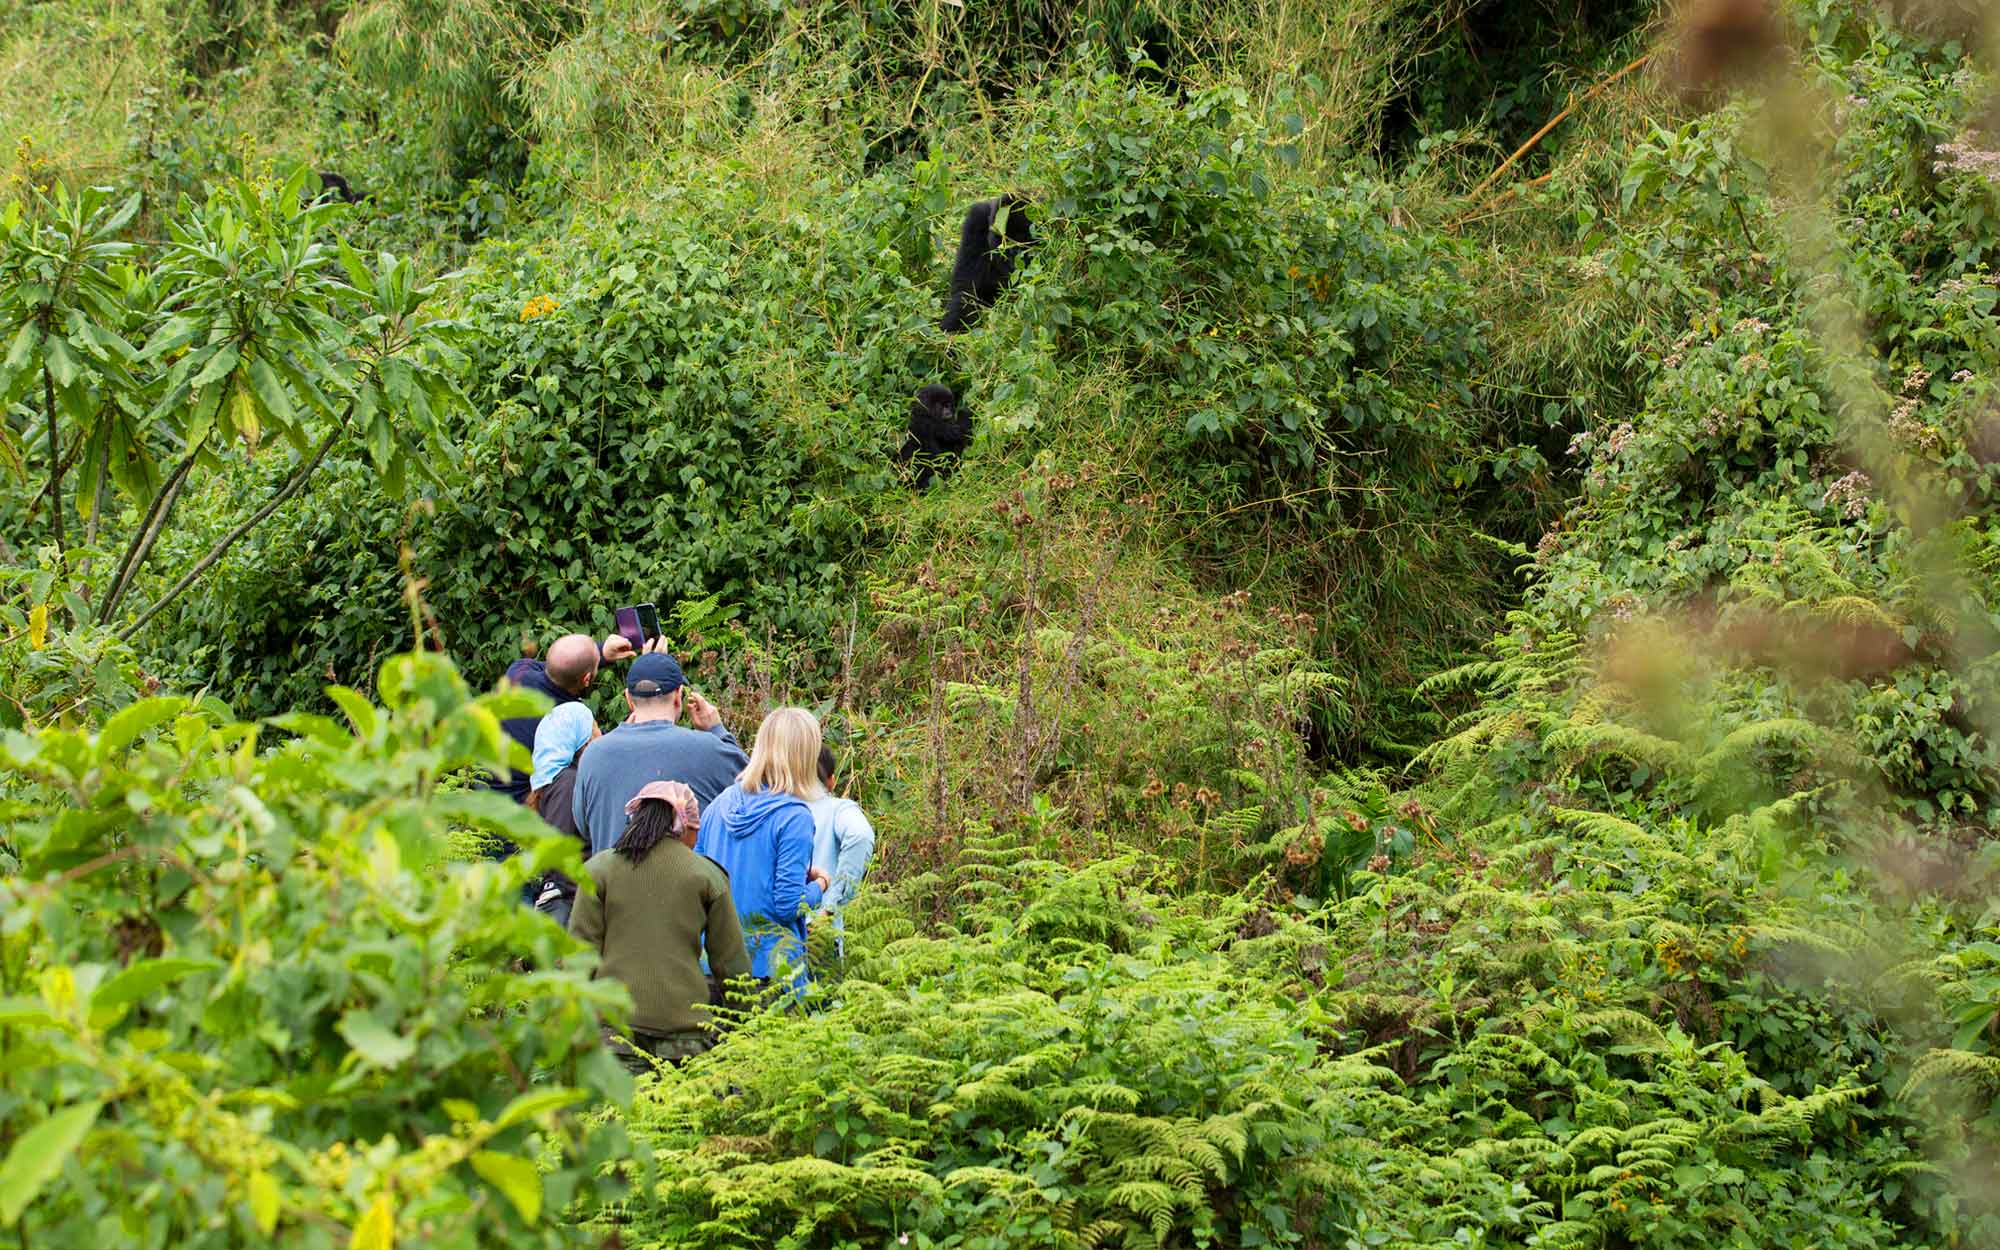 Safari-goers on a gorilla trek see a mountain gorilla at Rwanda's Volcanos National Park